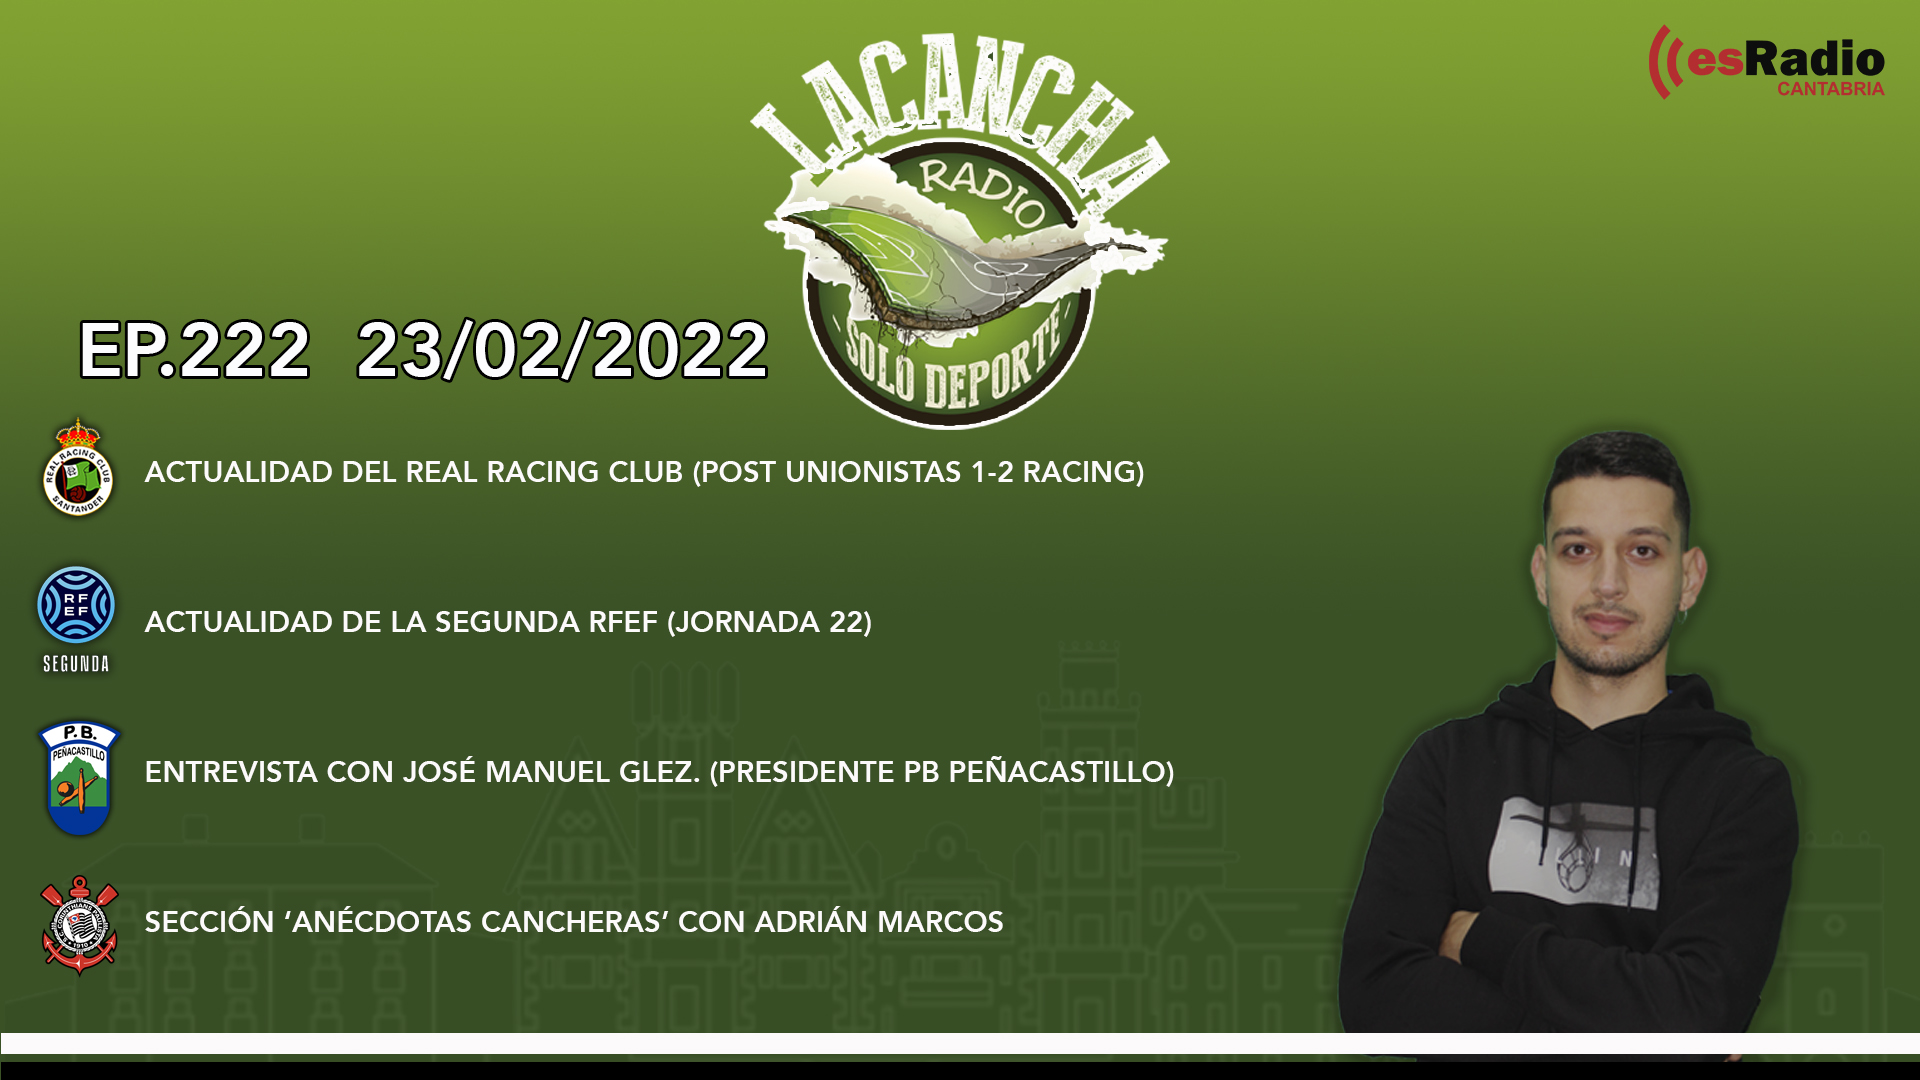 La Cancha Ep. 222 (23/02/2022)